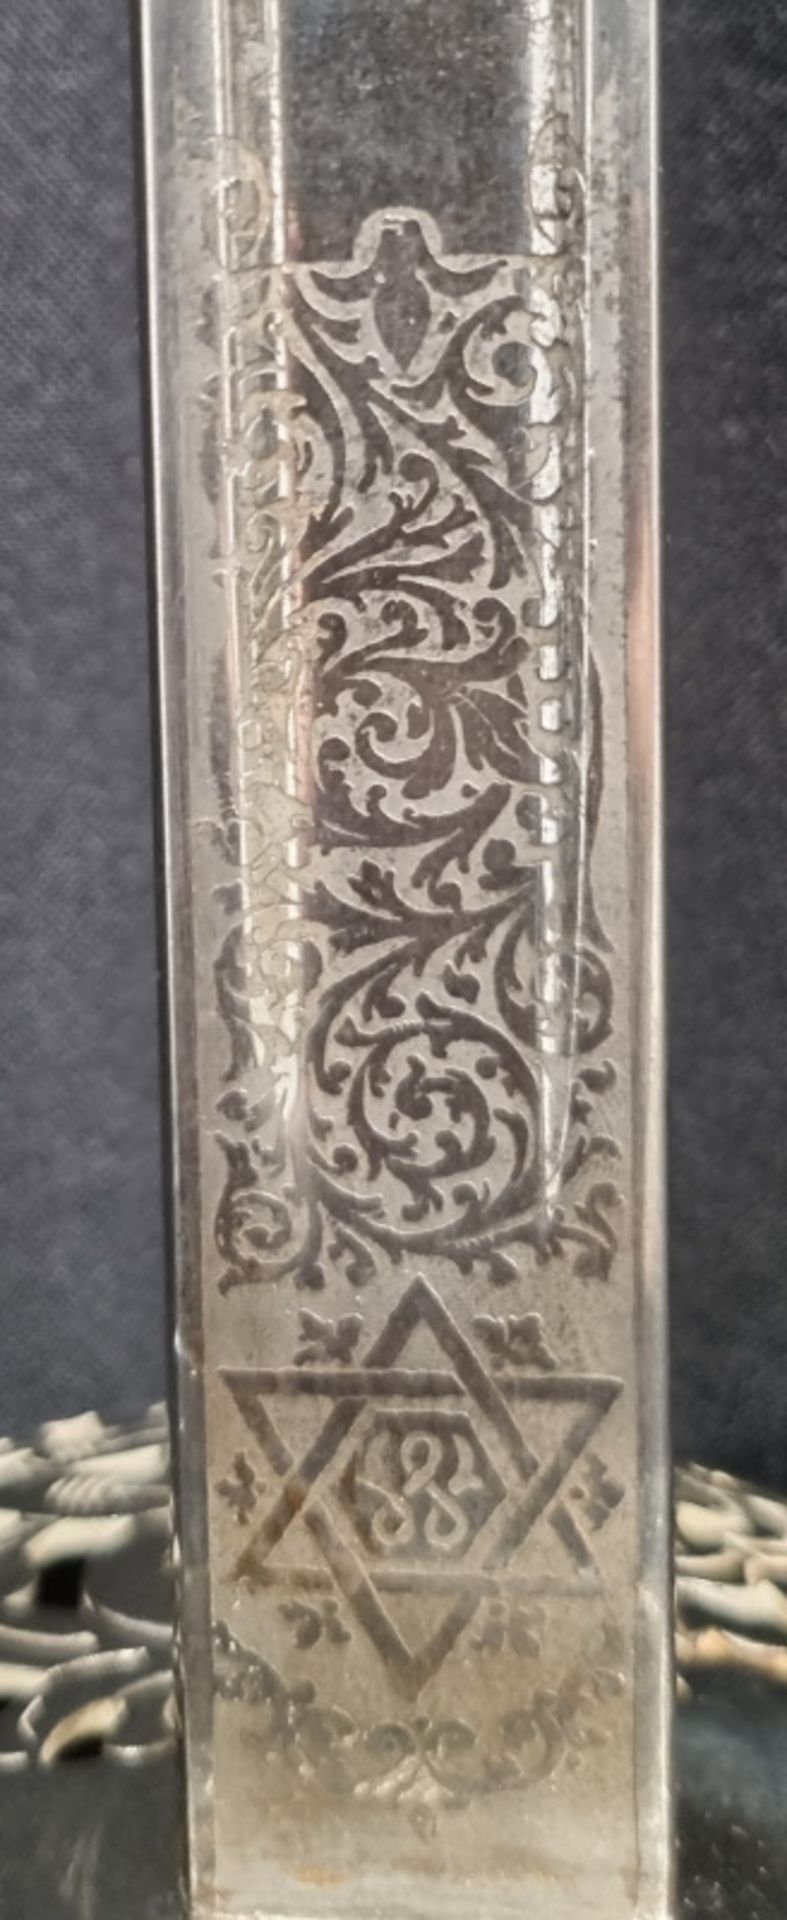 Wilkinson Sword Ltd. Ceremonial Sword - serial number 84032 - Image 7 of 11